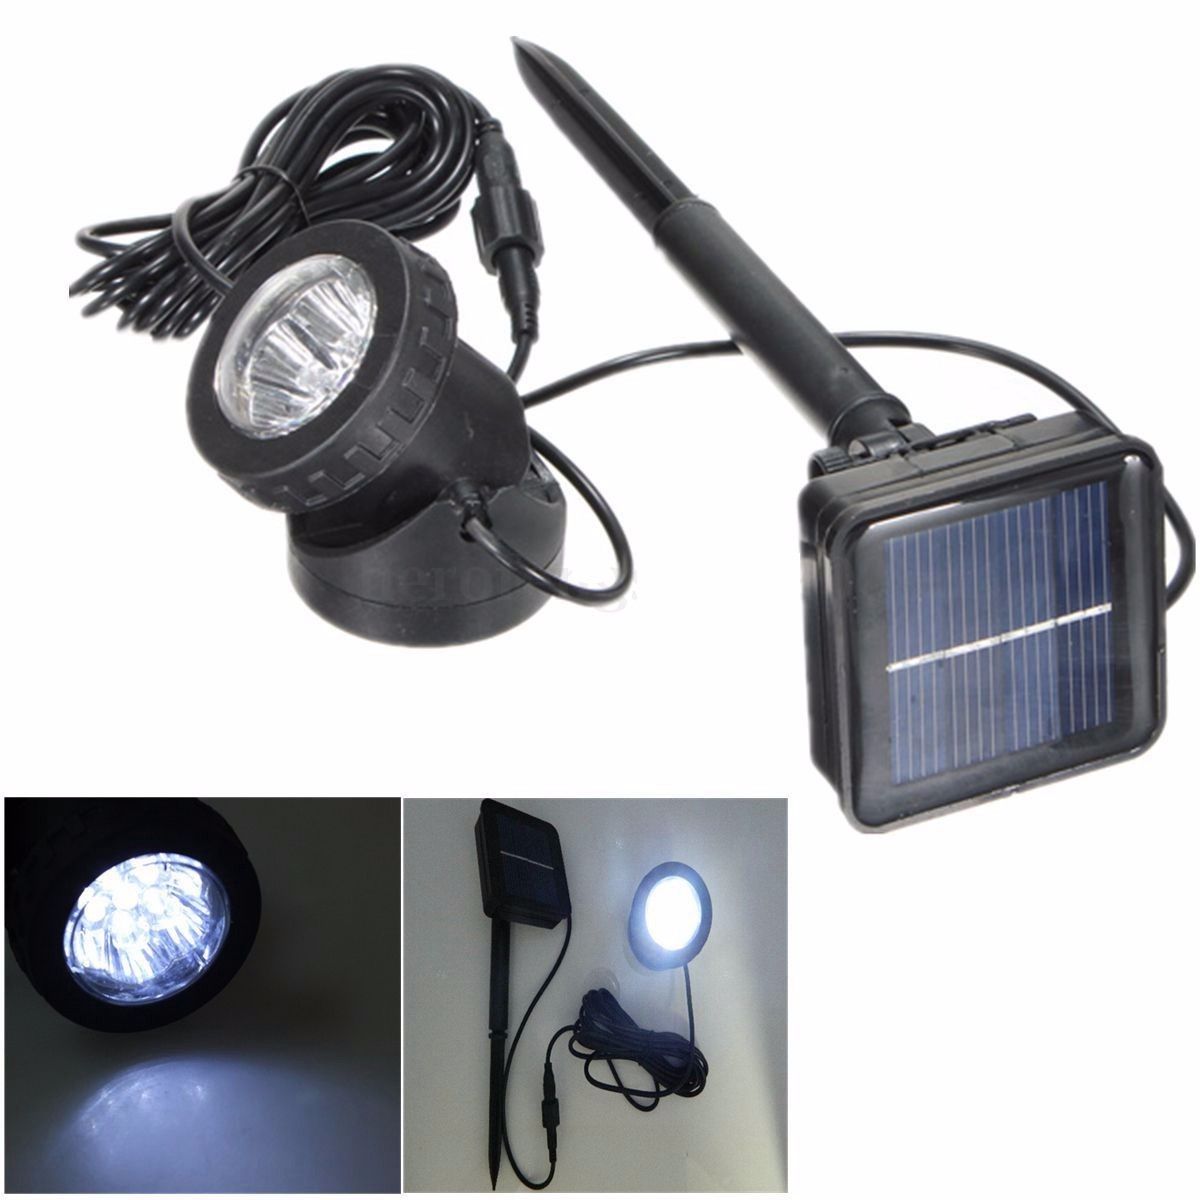 Solar-Powered-6-LED-Outdooors-Garden-Landscape-Yard-Lawn-Spot-Lightt-Light-Lamp-1120772